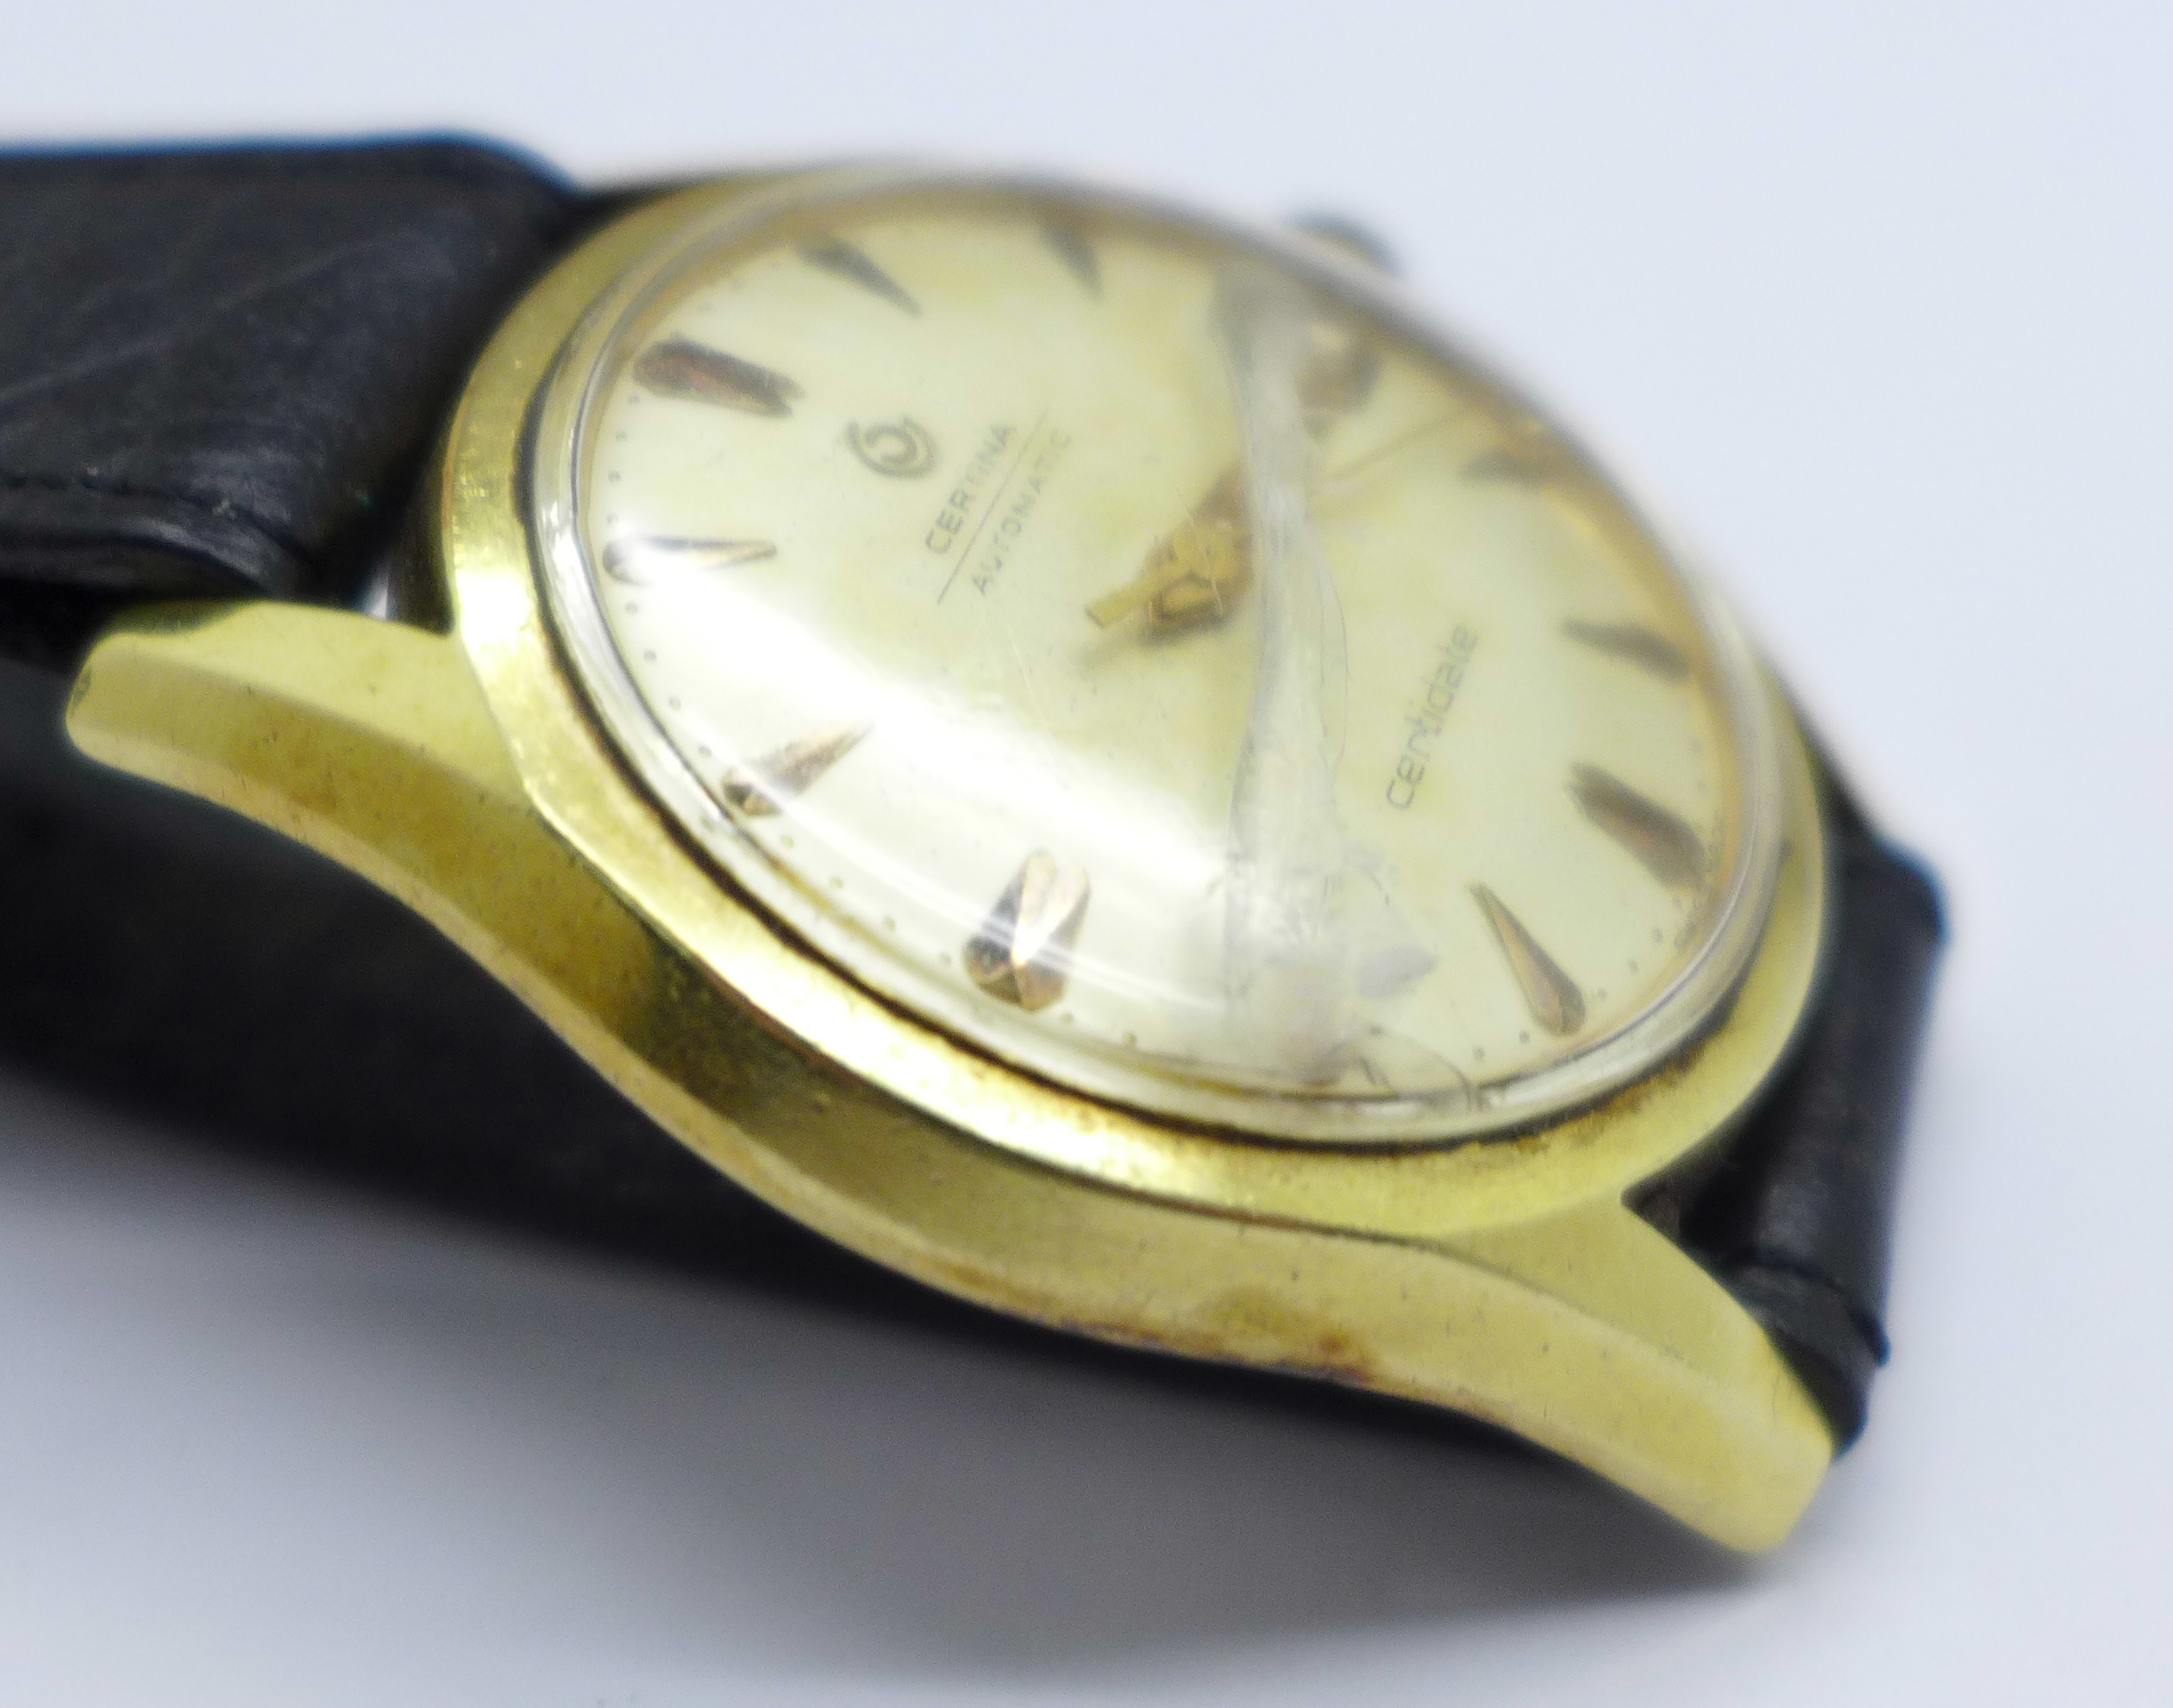 A Certina Certidate automatic wristwatch, glass a/f - Image 3 of 6